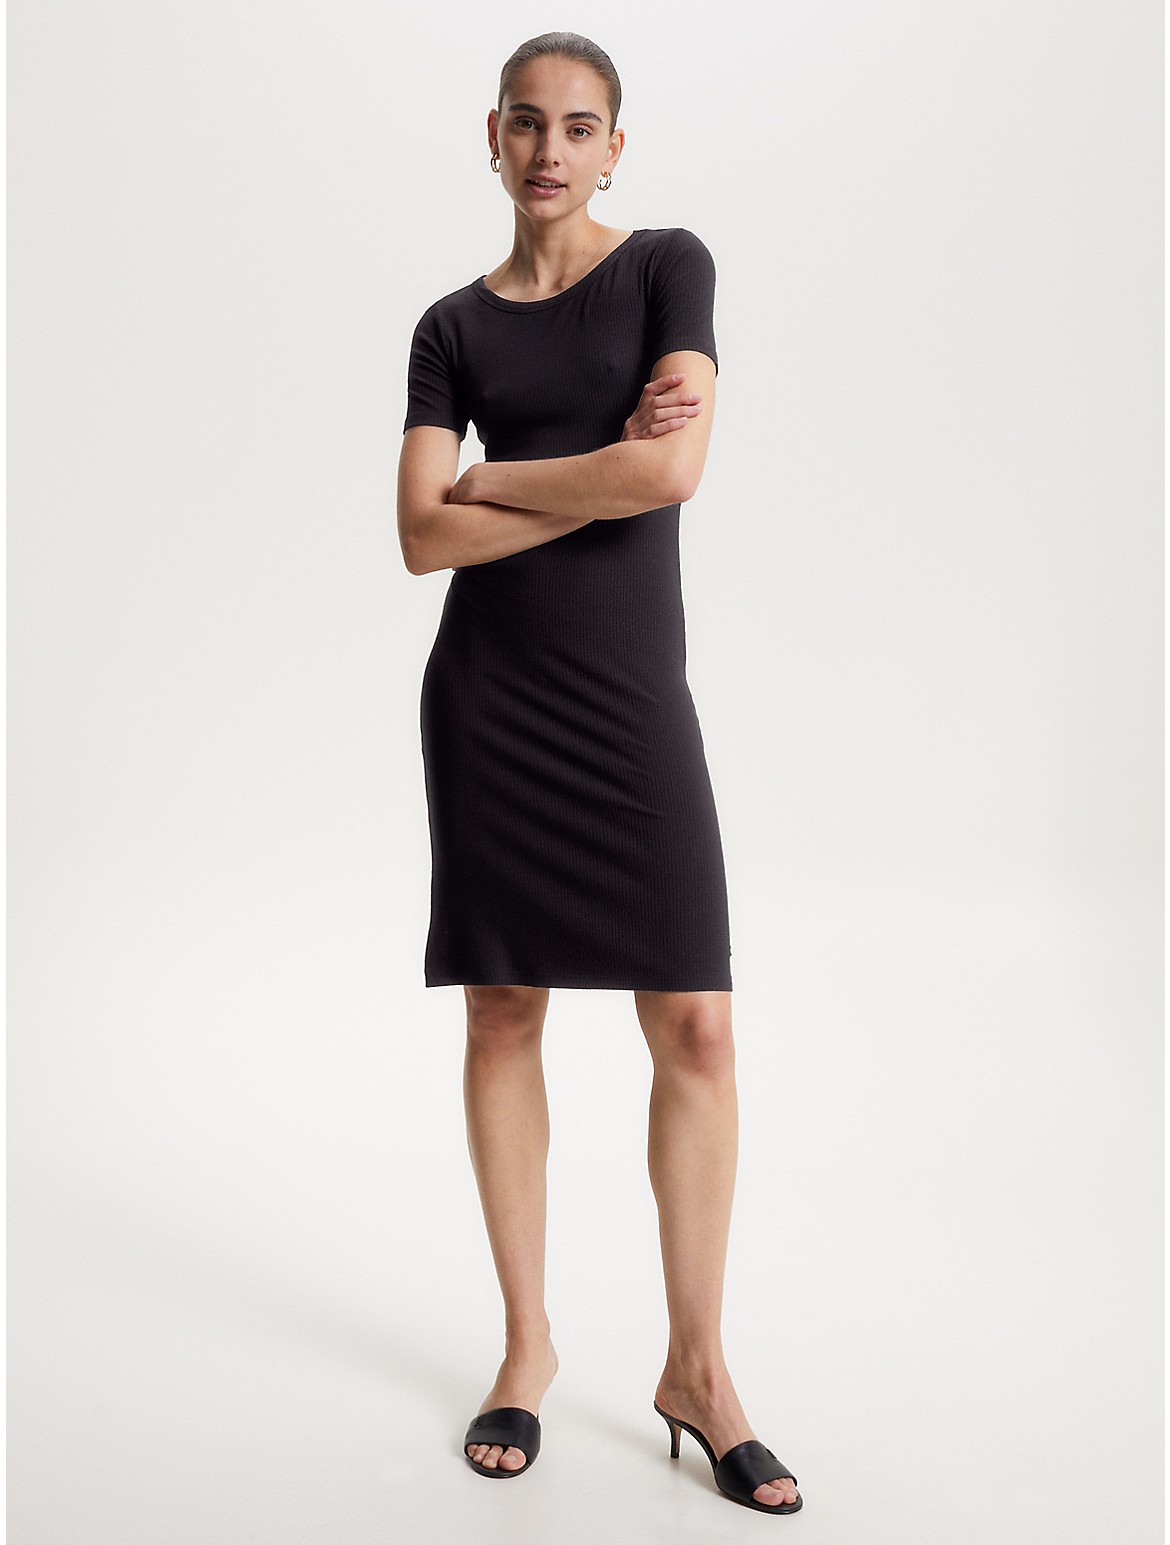 Tommy Hilfiger Women's Slim Fit Ribbed Short-Sleeve Dress - Black - S